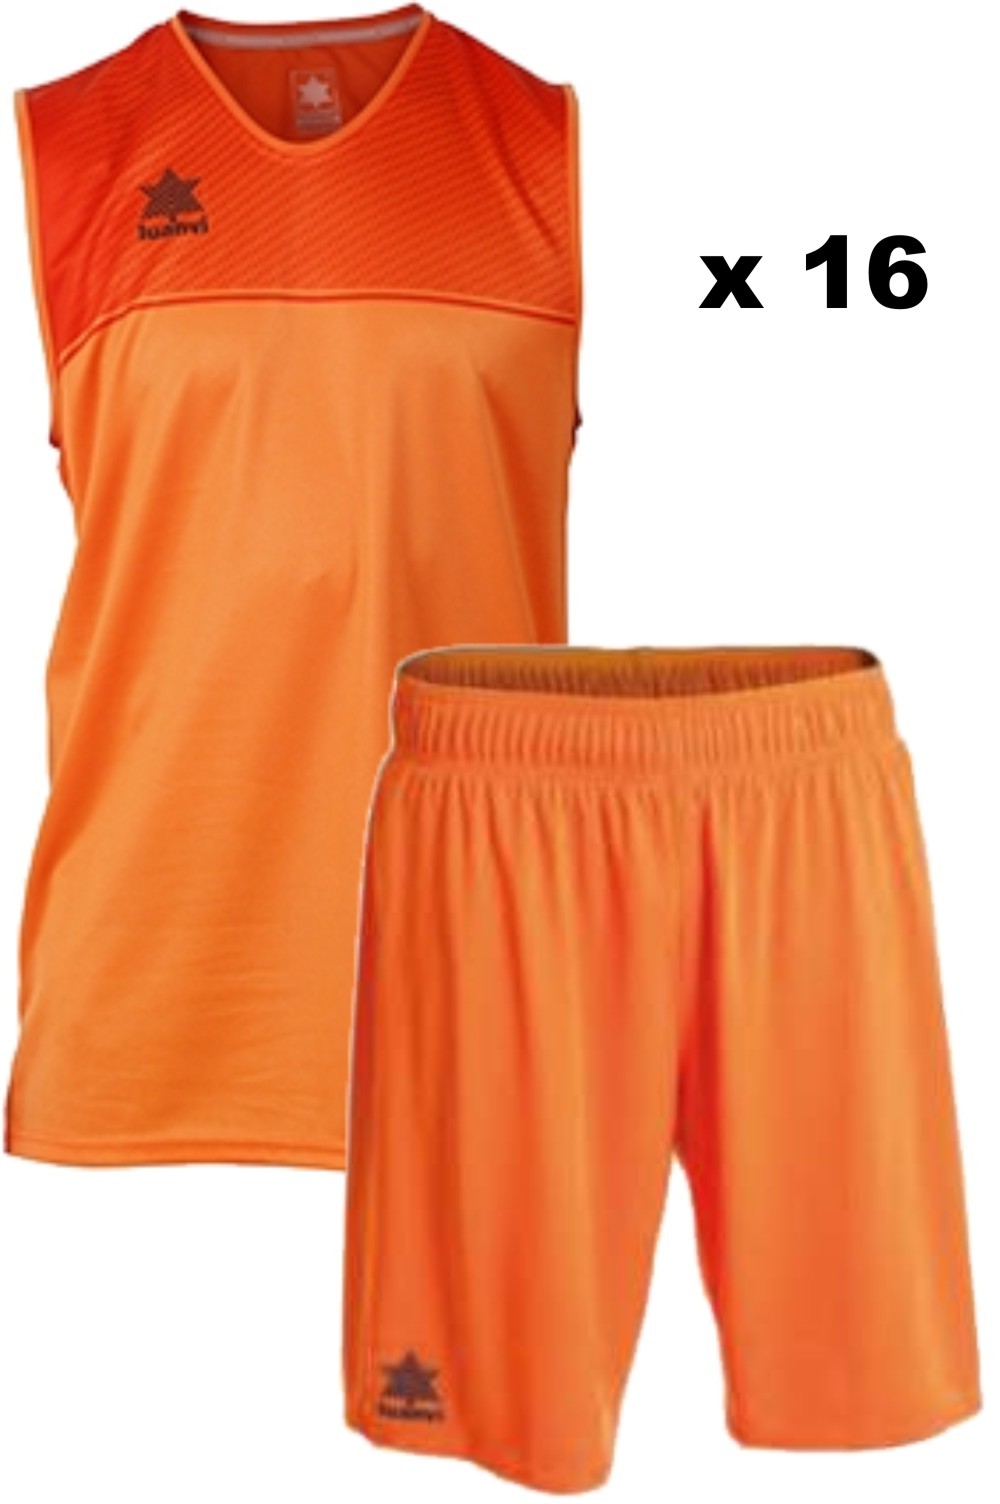 TEAM SET - CLEARANCE - Basketball Kits - Luanvi - Orange - 16 Tops, 16 Shorts - Sizes S - 3XL(see description for details)